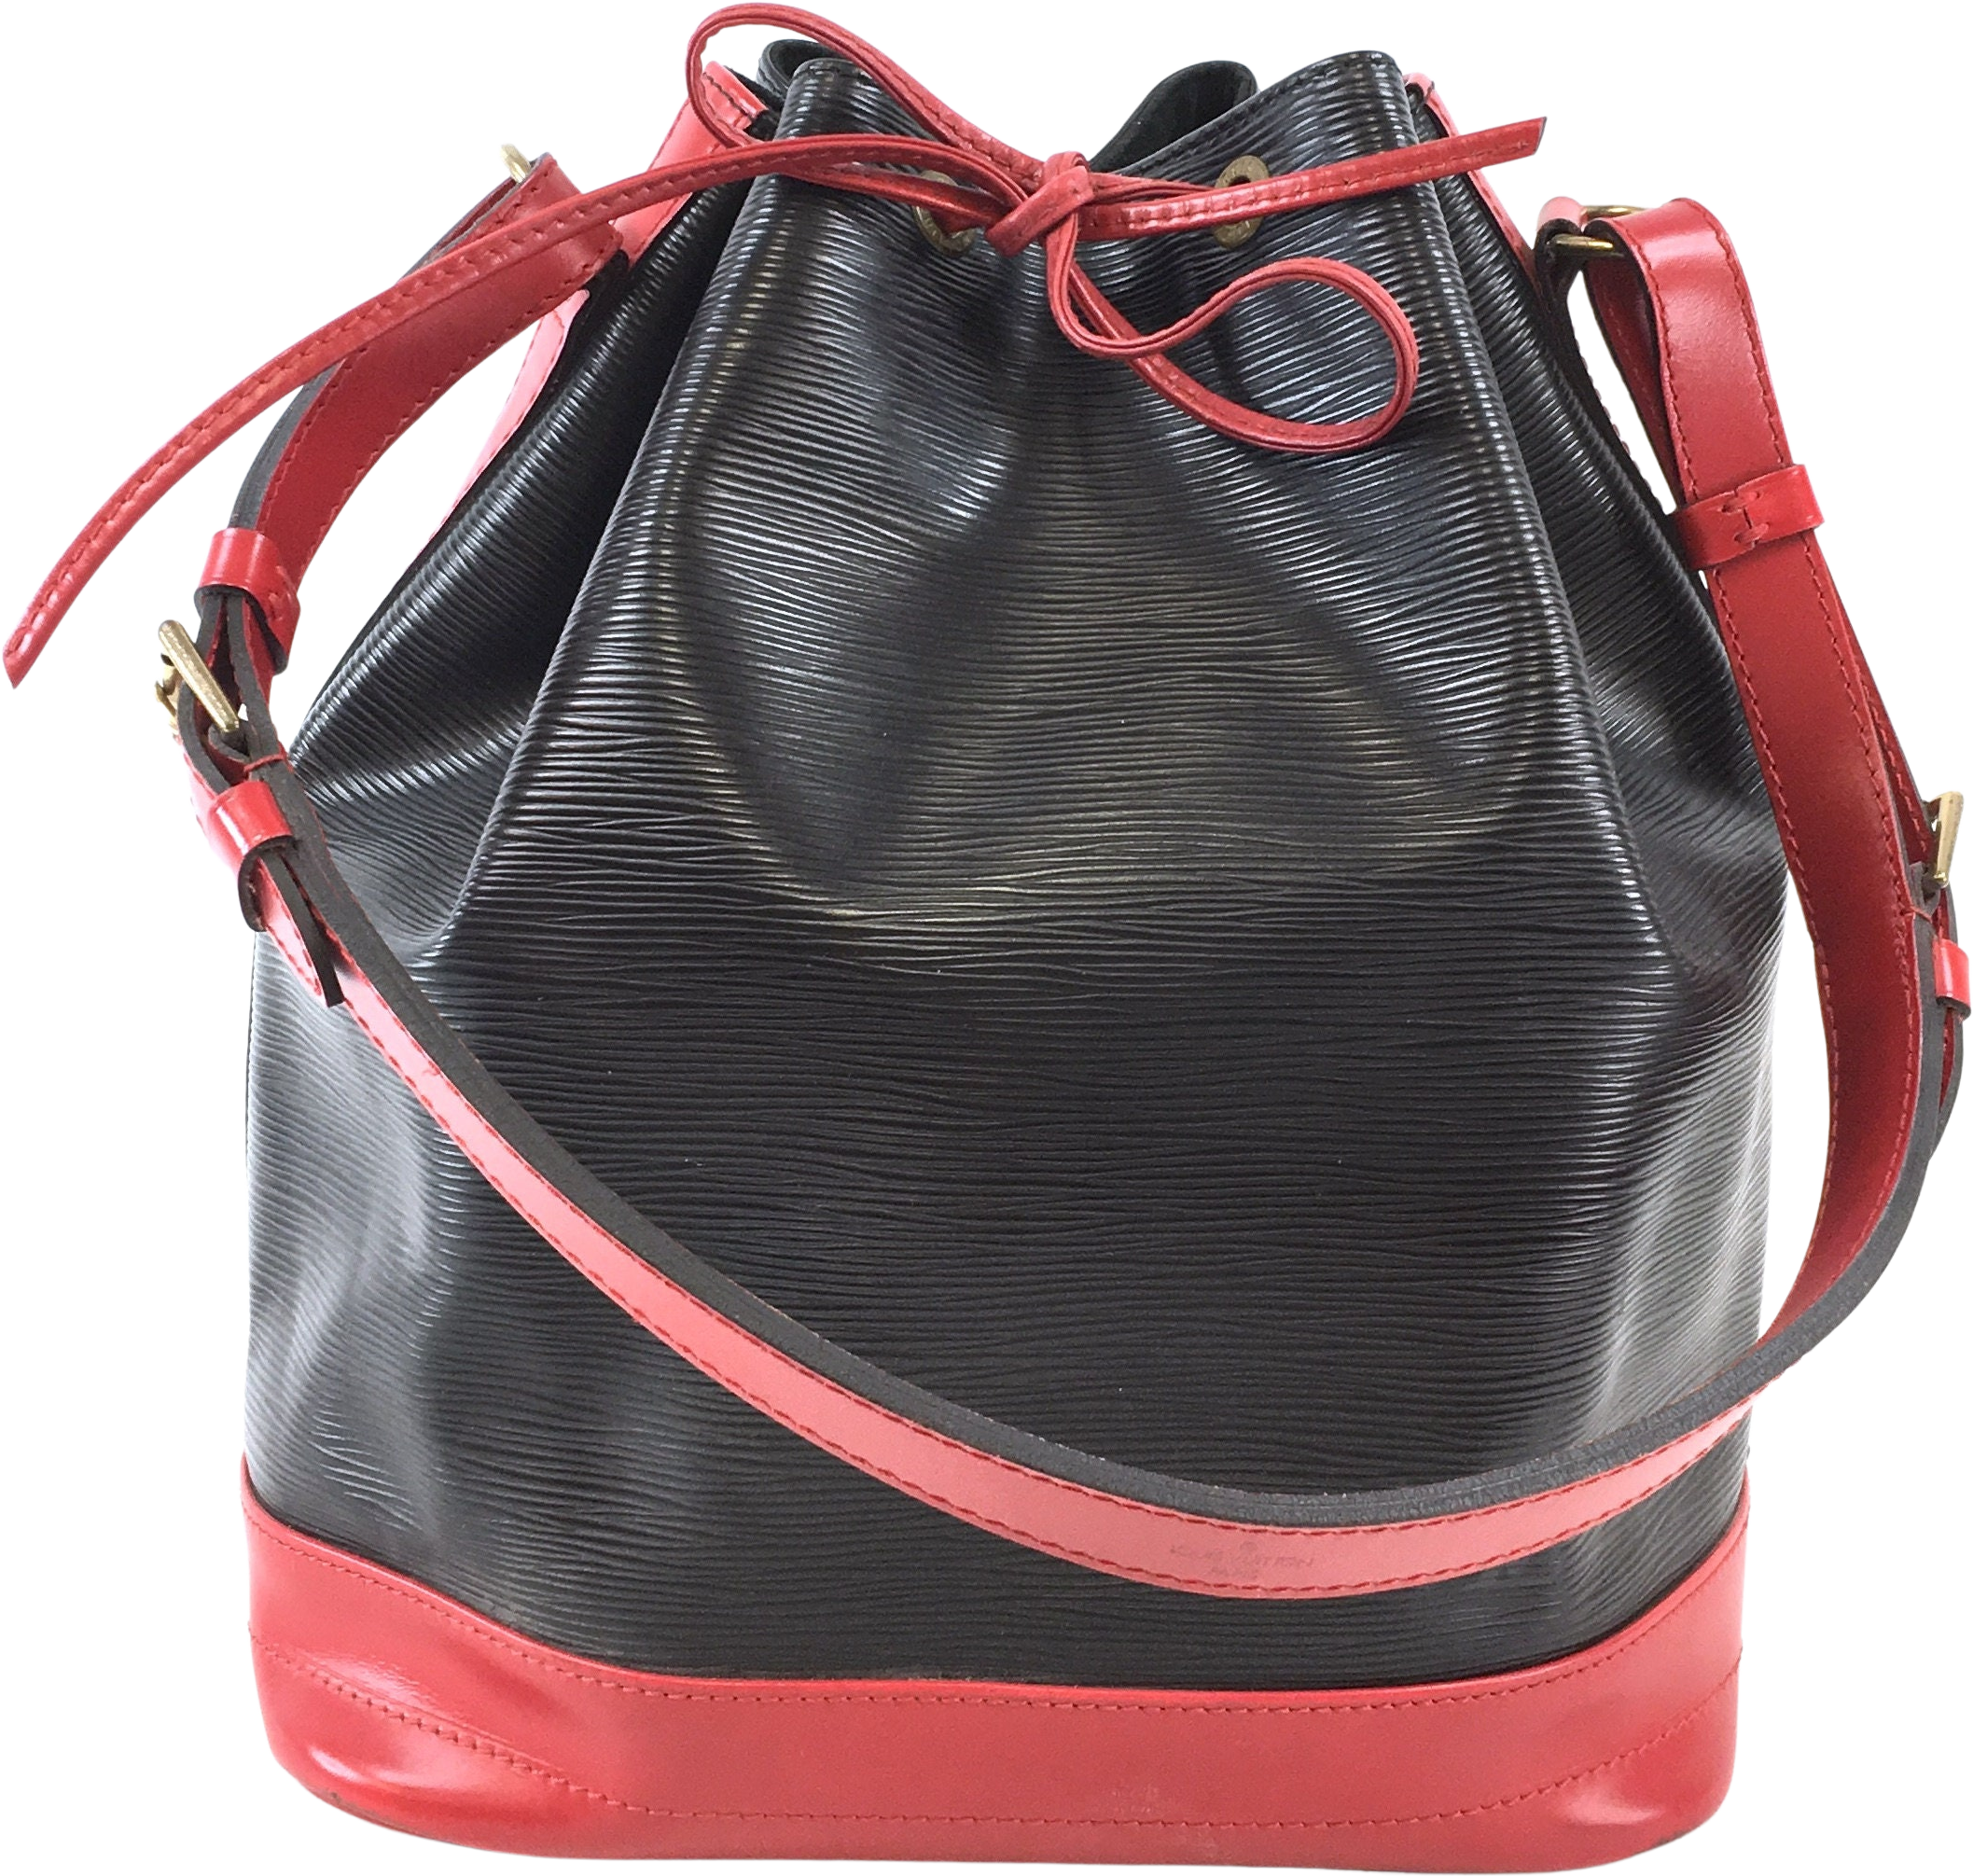 LOUIS VUITTON Black Red Epi Leather Large Noe Bag